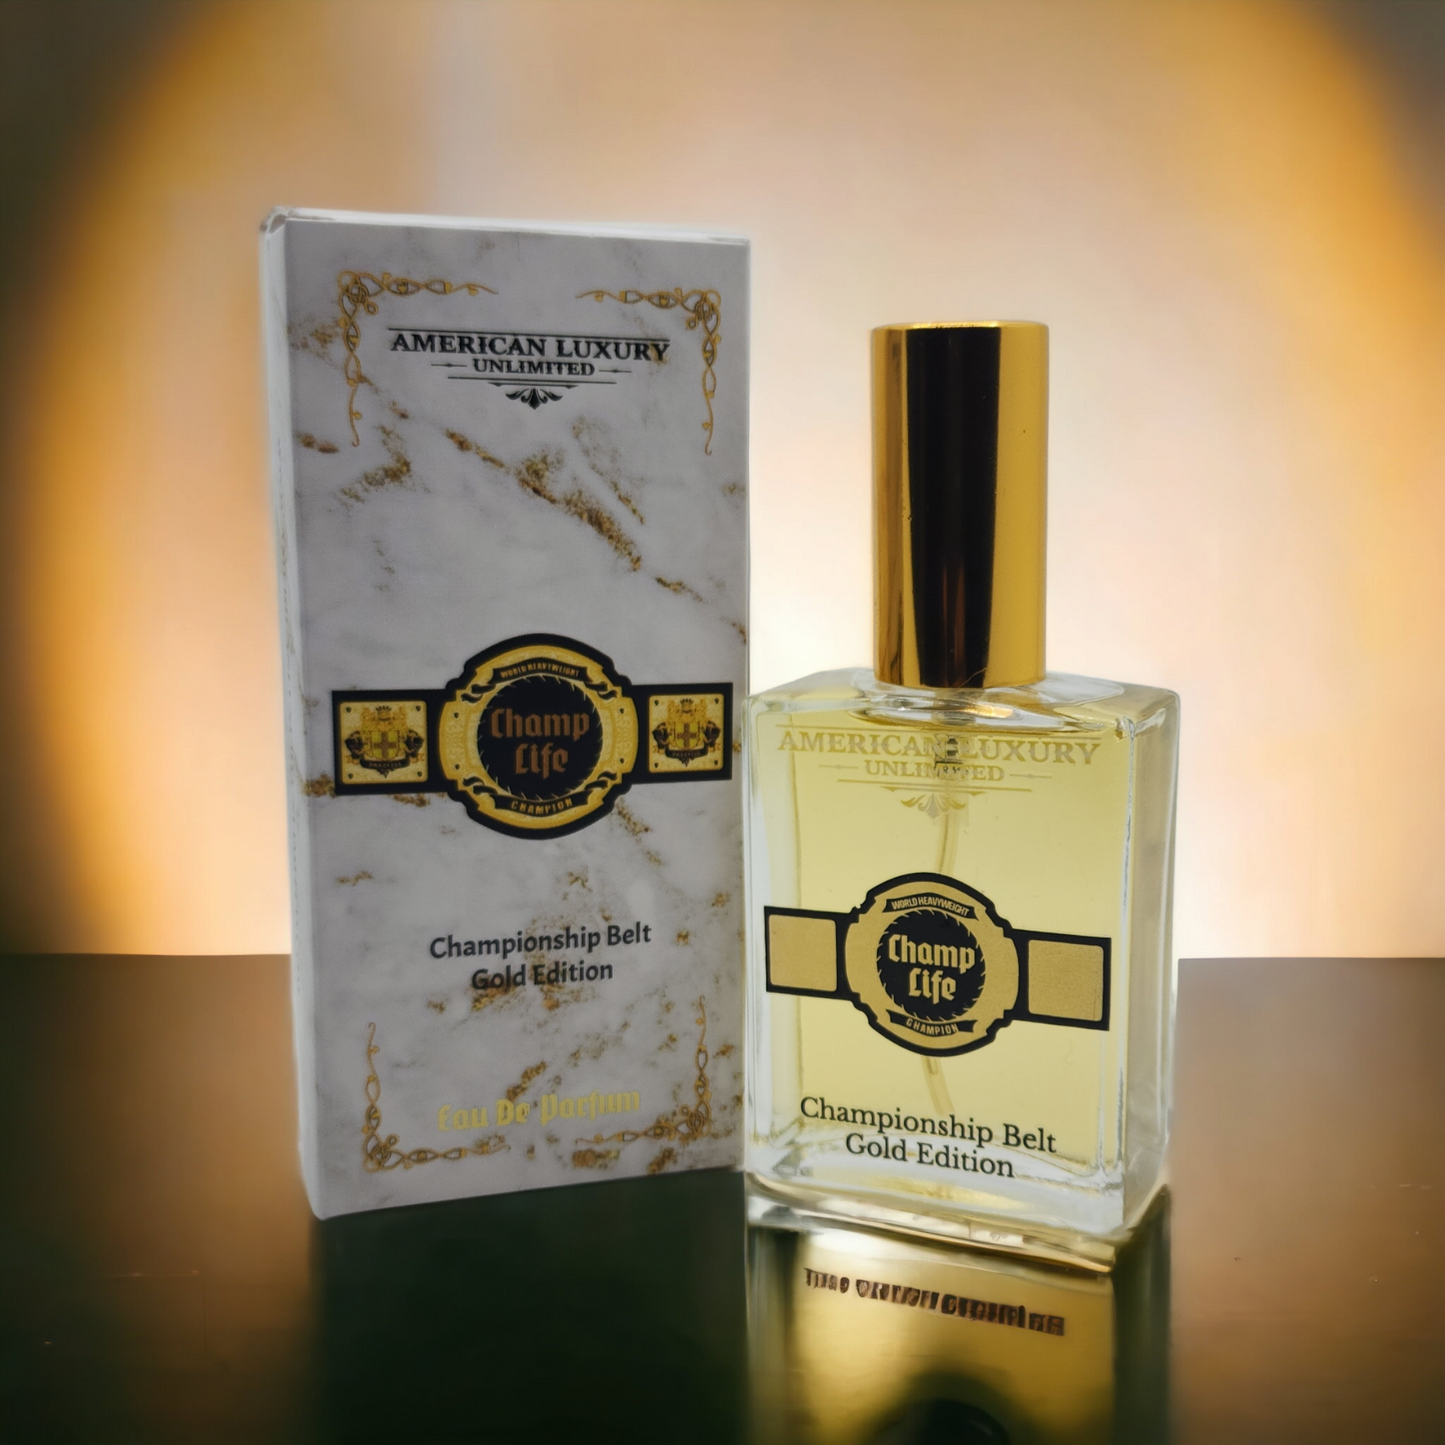 The Gold Standard - Rose Men's Fragrance